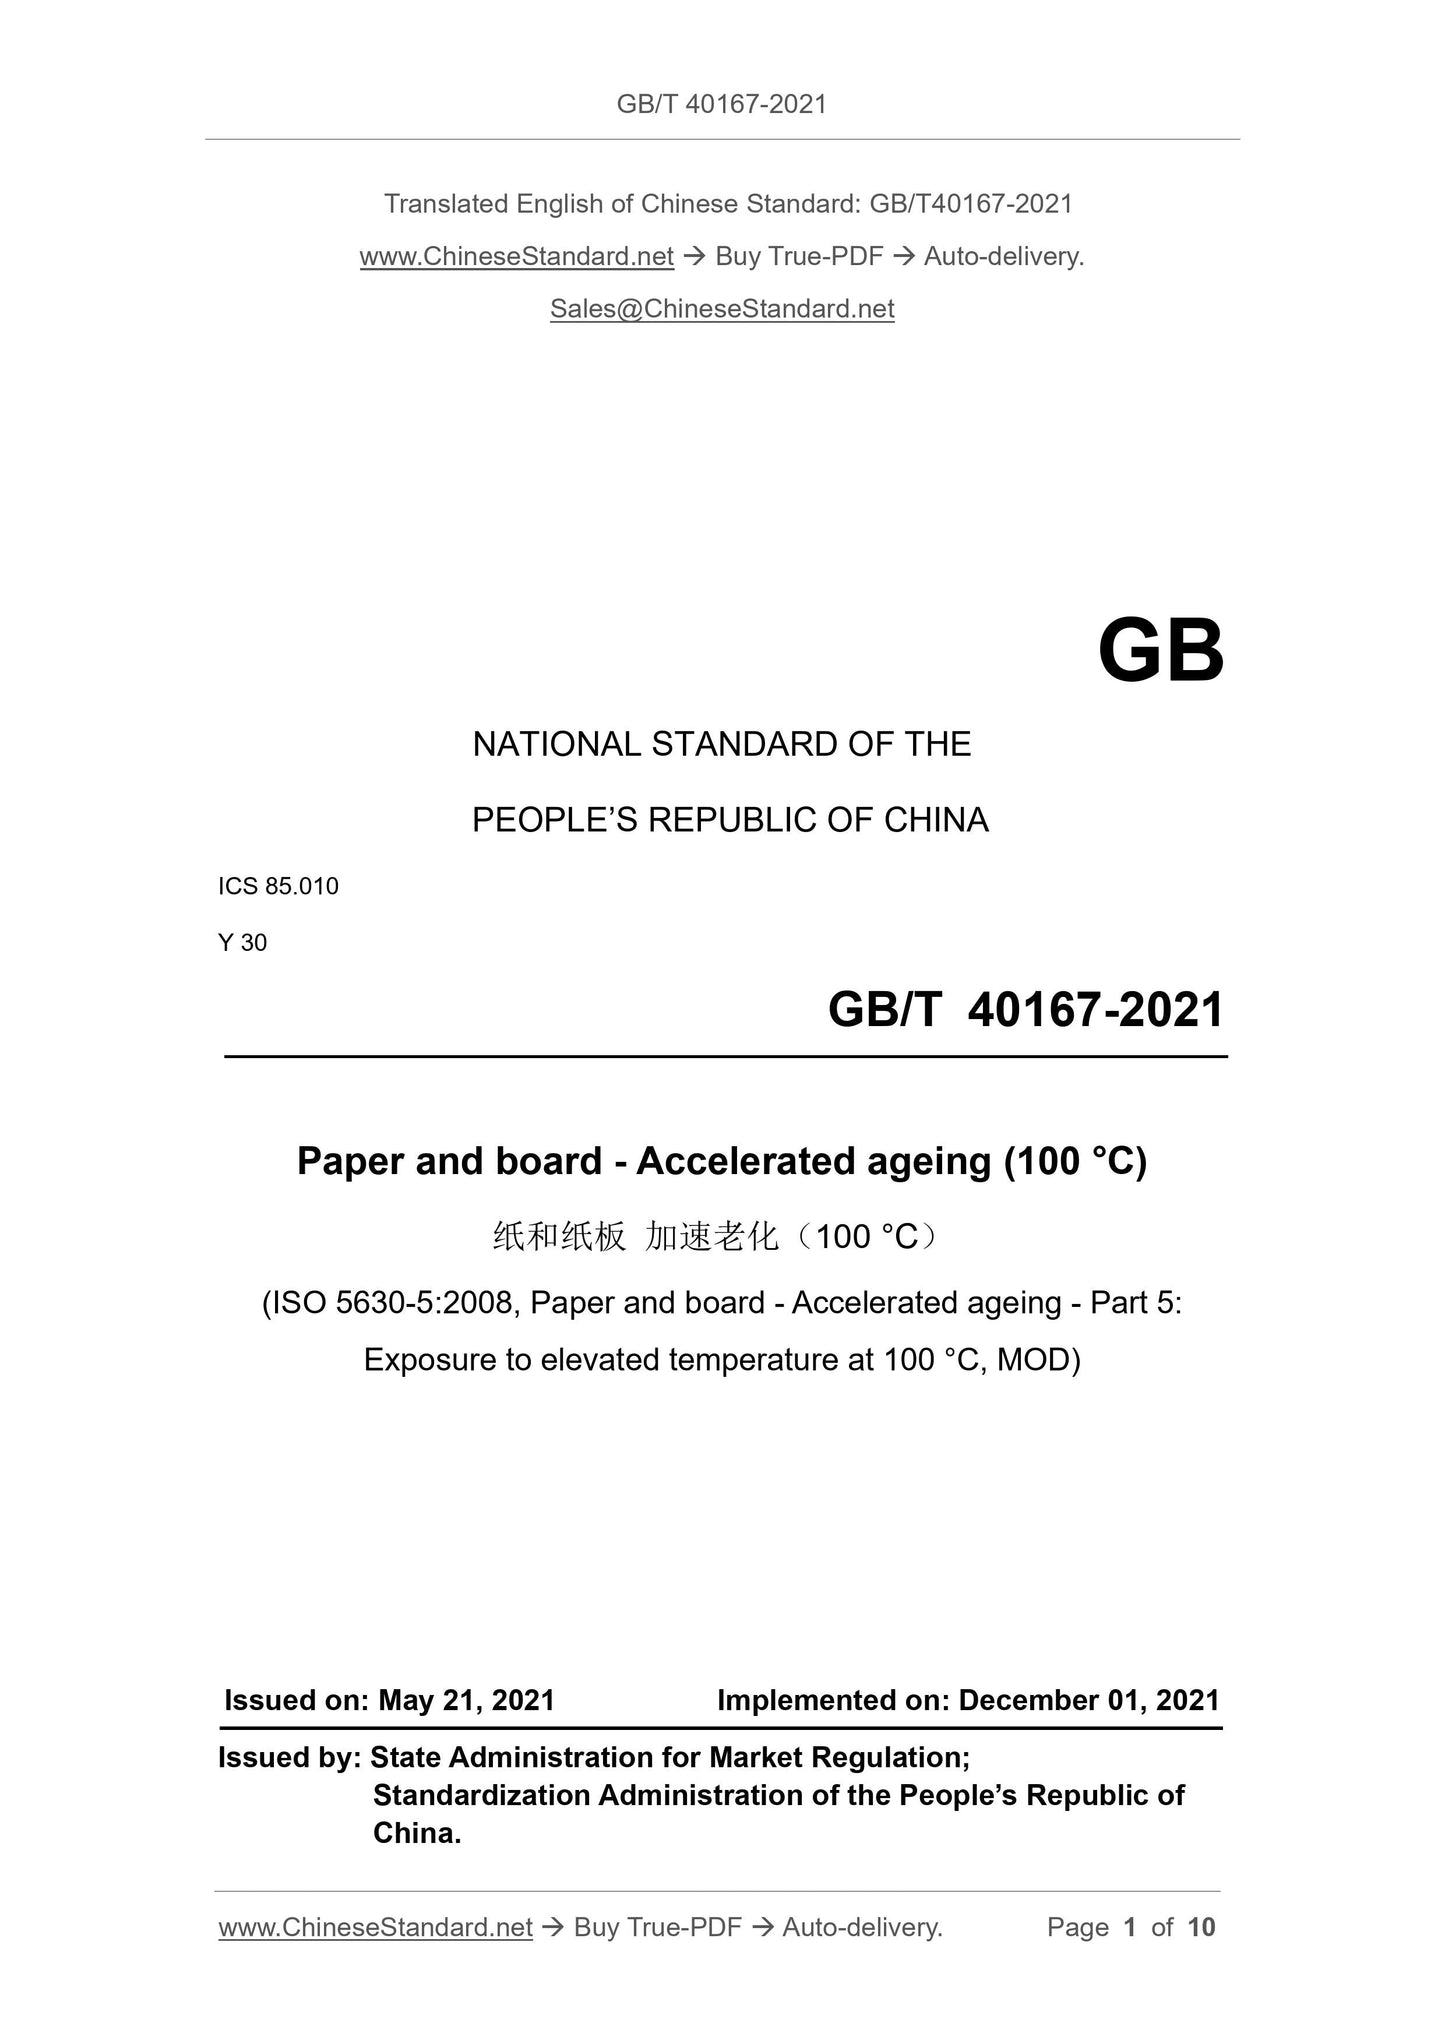 GBT40167-2021 Page 1